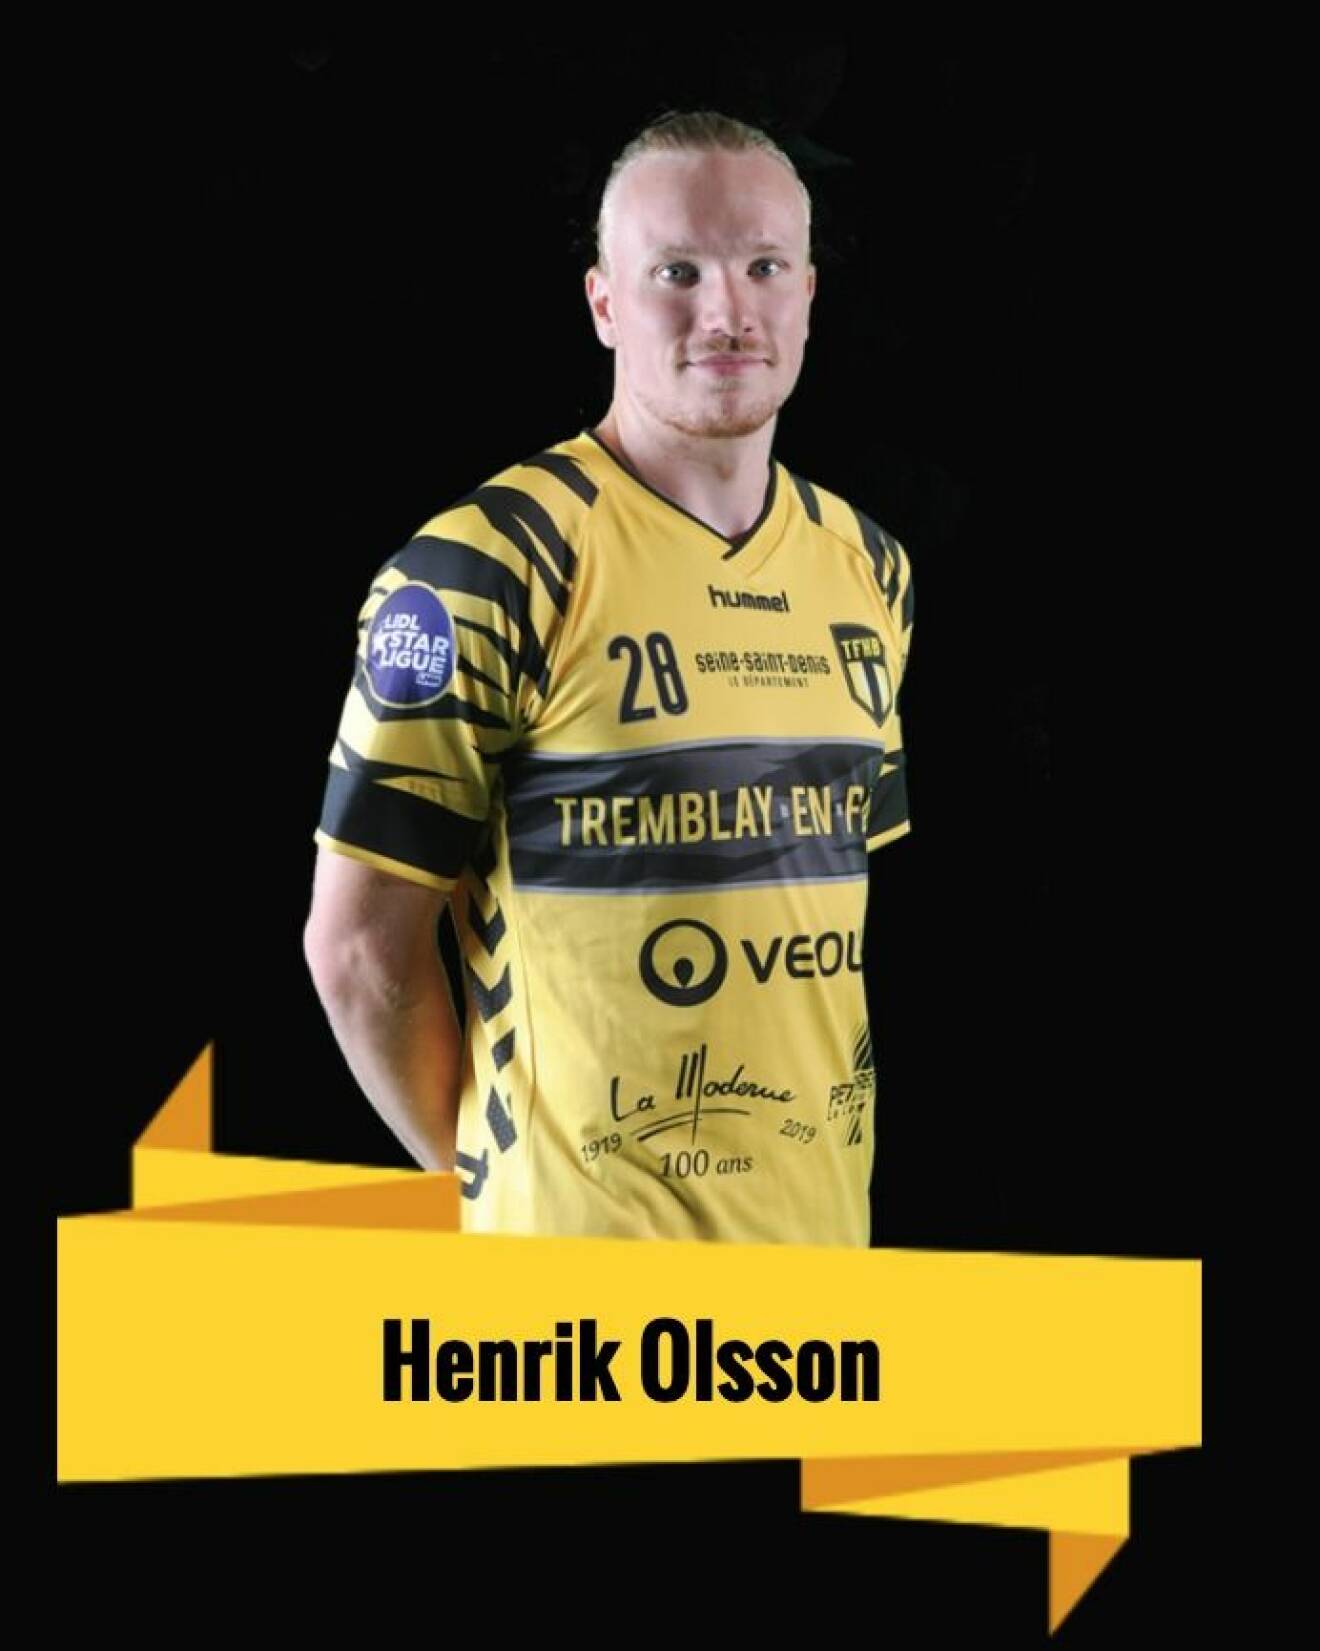 Henrik Olsson